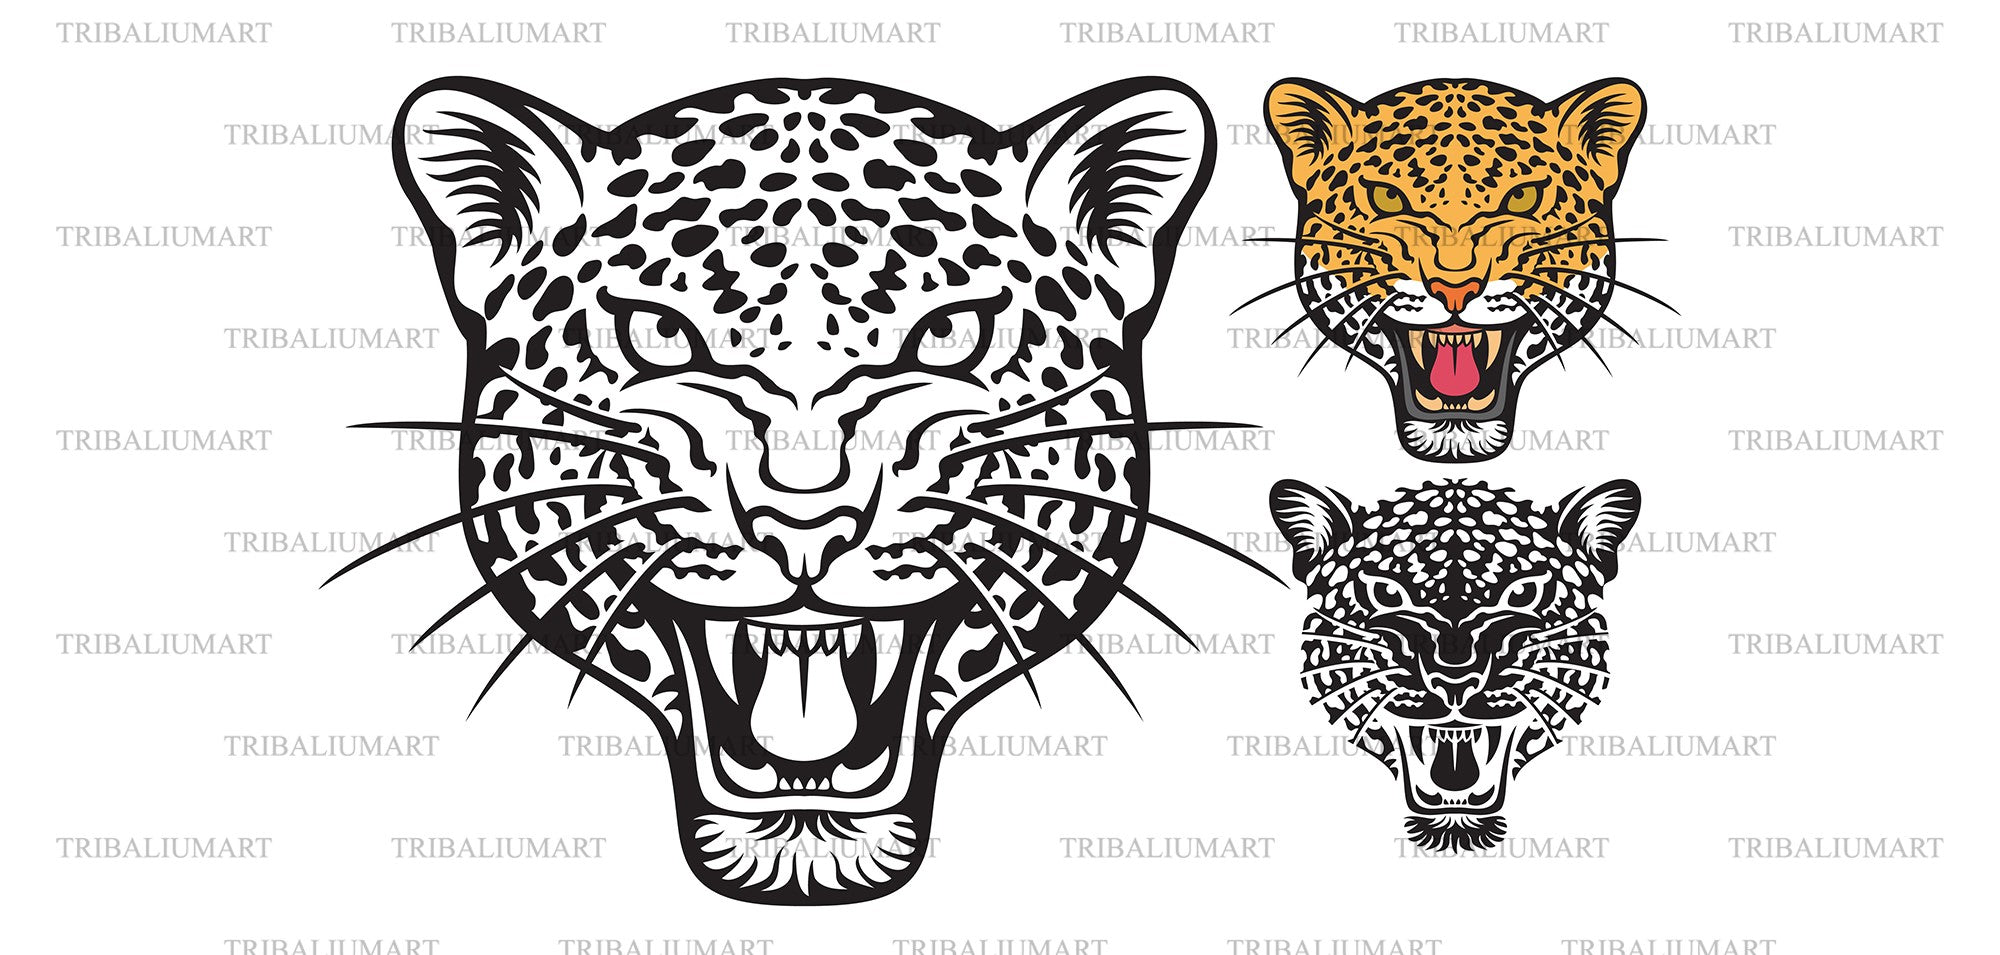 jaguar head drawing for kids